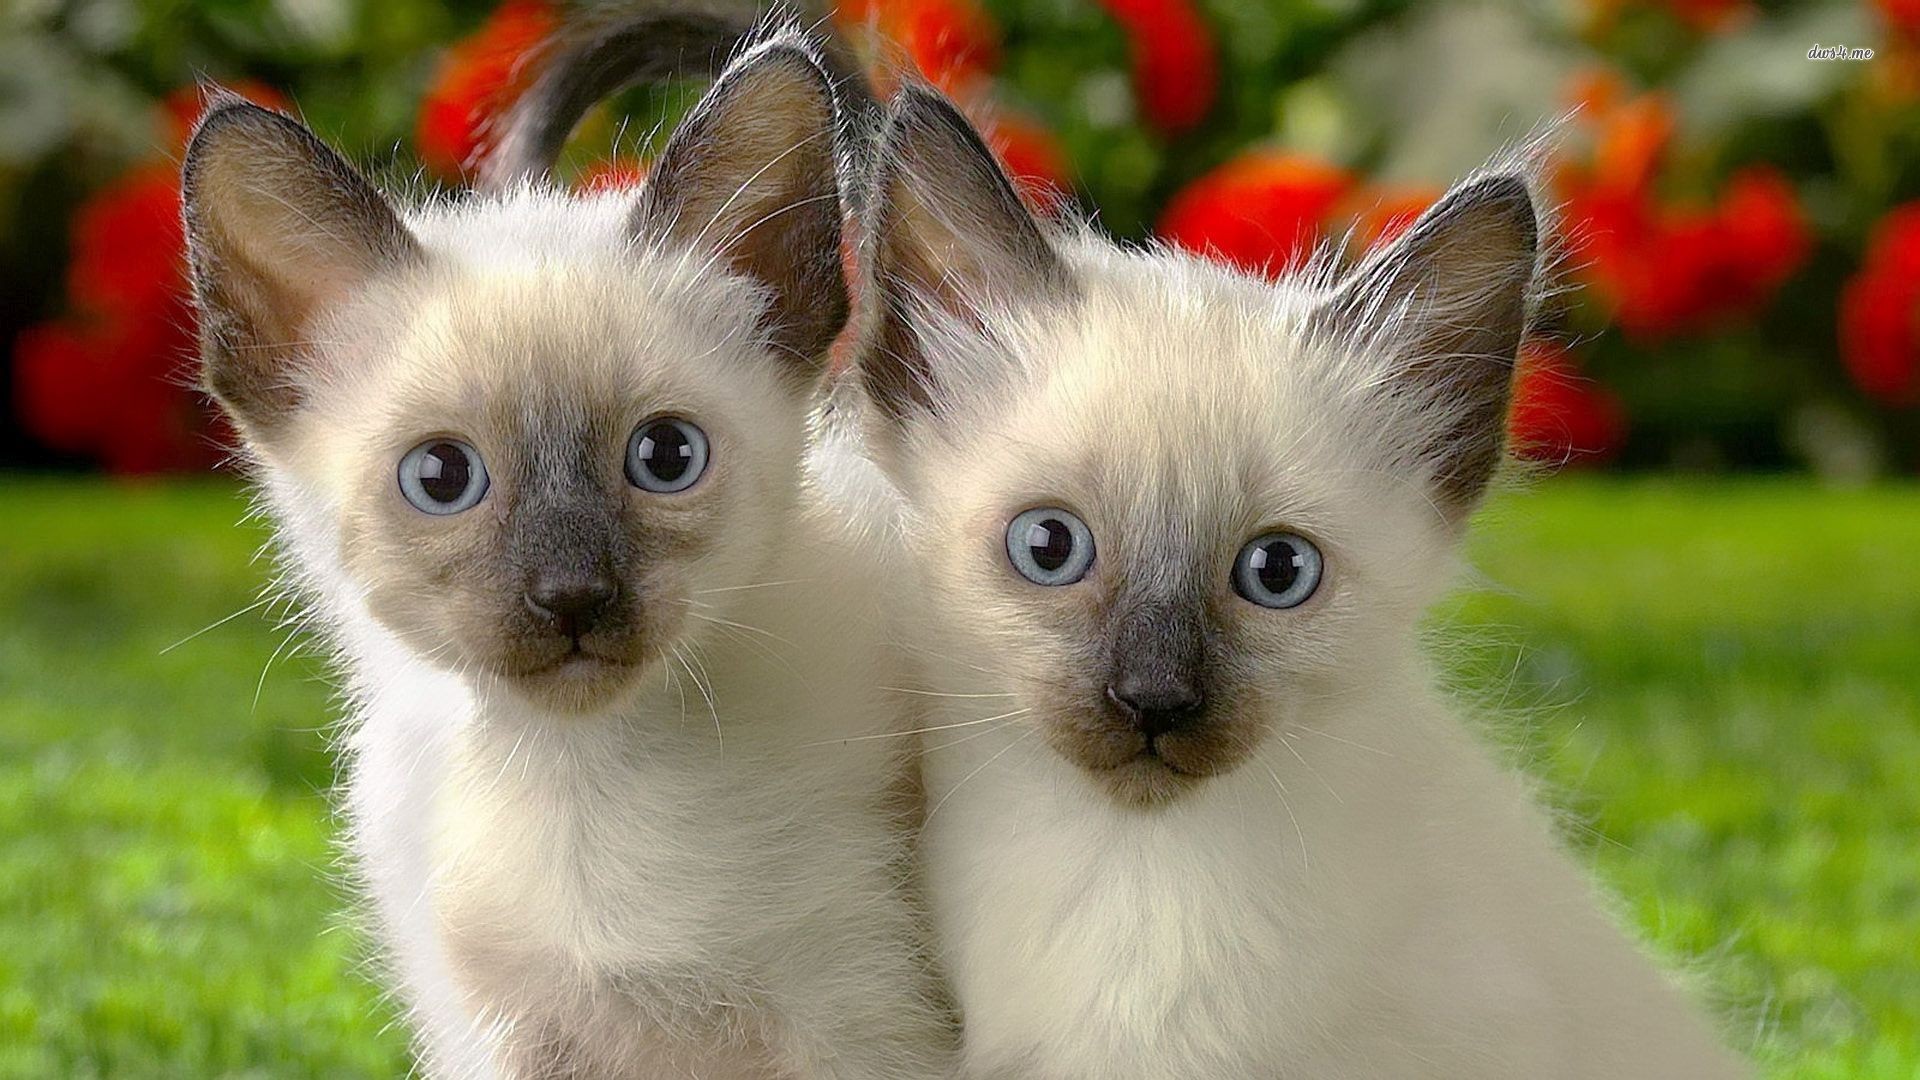  Kittens  wallpaper    Download free stunning full HD  